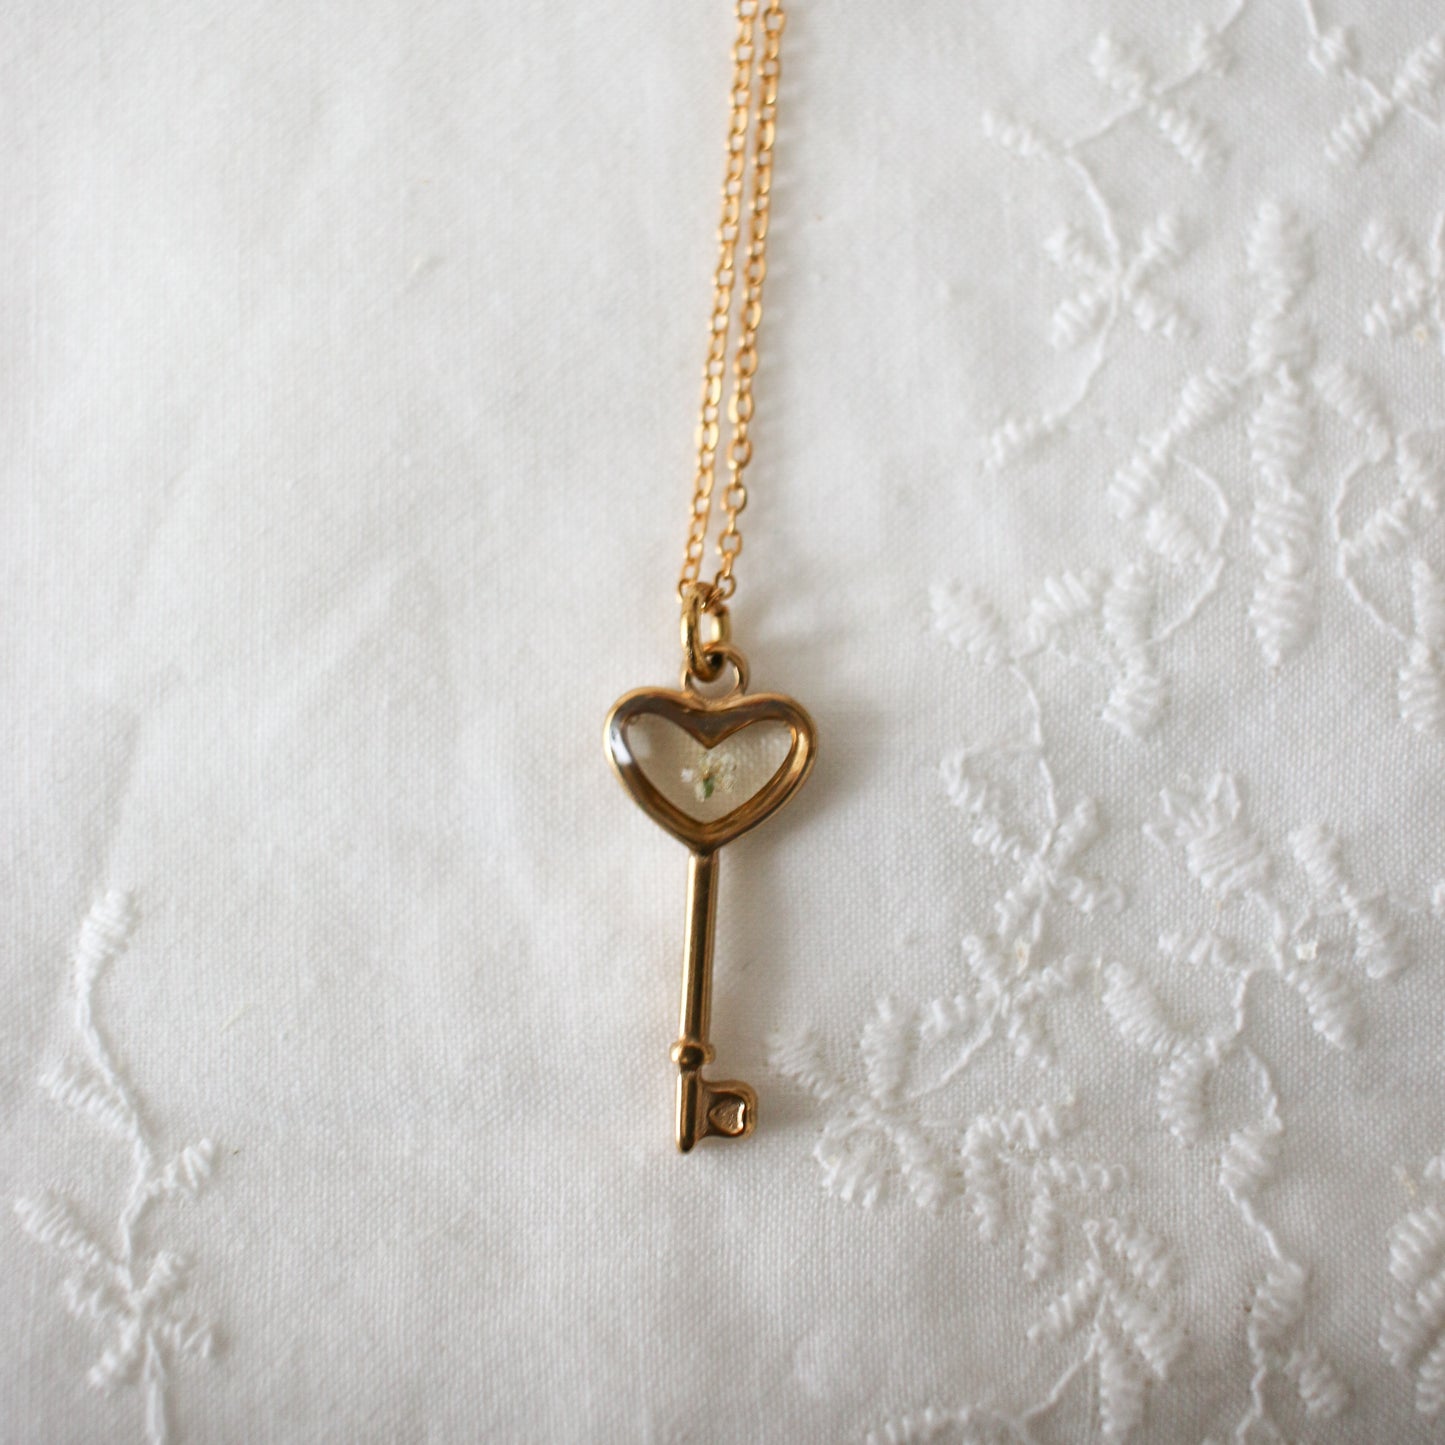 The Garden Key Necklace